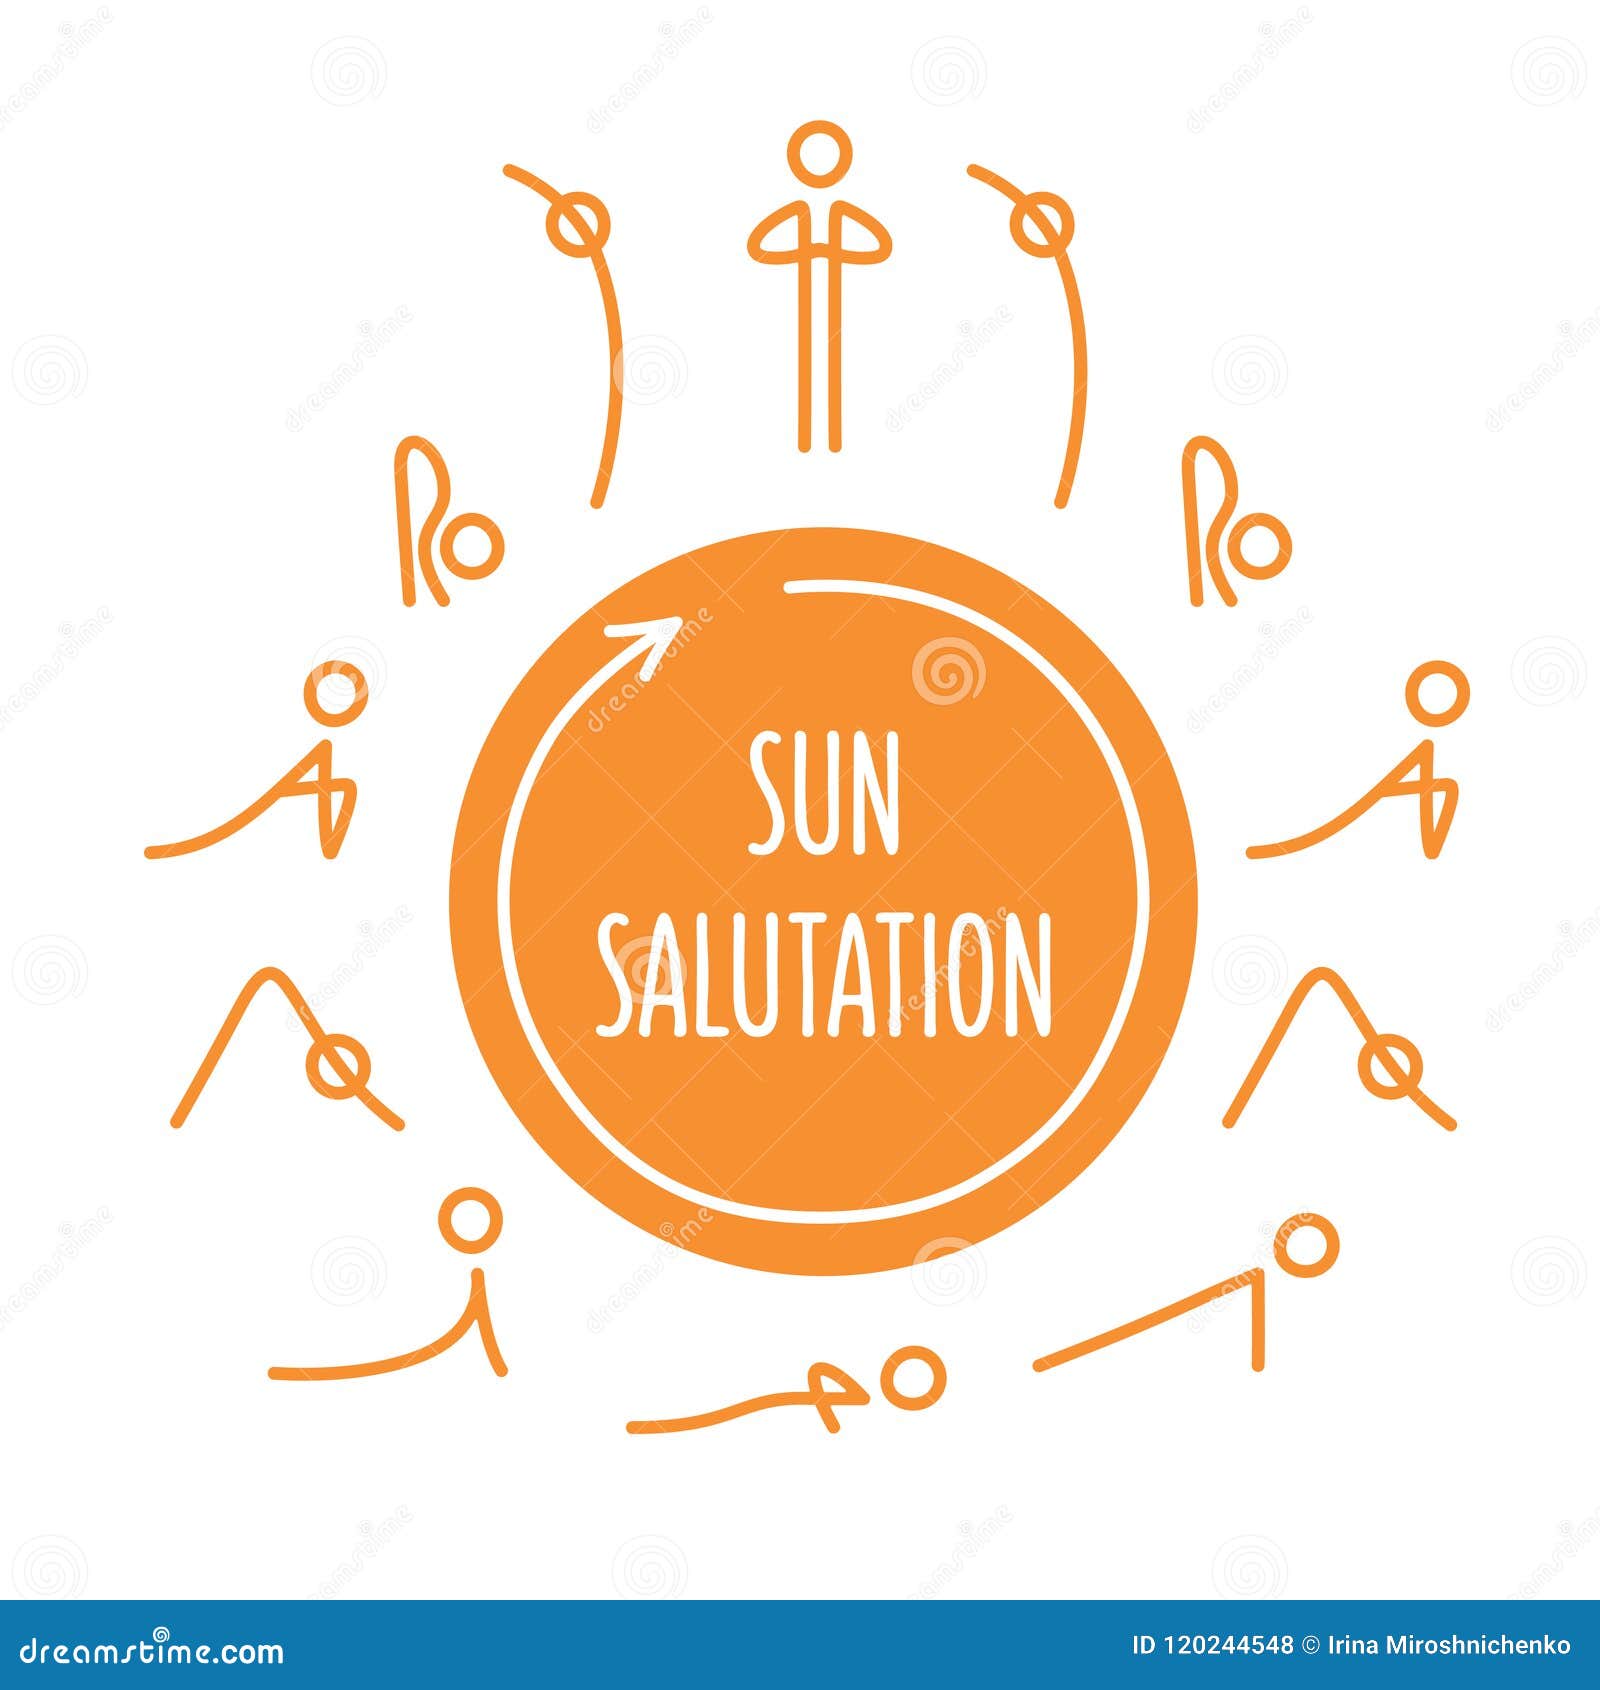 sun salutation yoga asanas surya namaskar sequence stick figure yoga poses circle representing sun simple minimal style 120244548